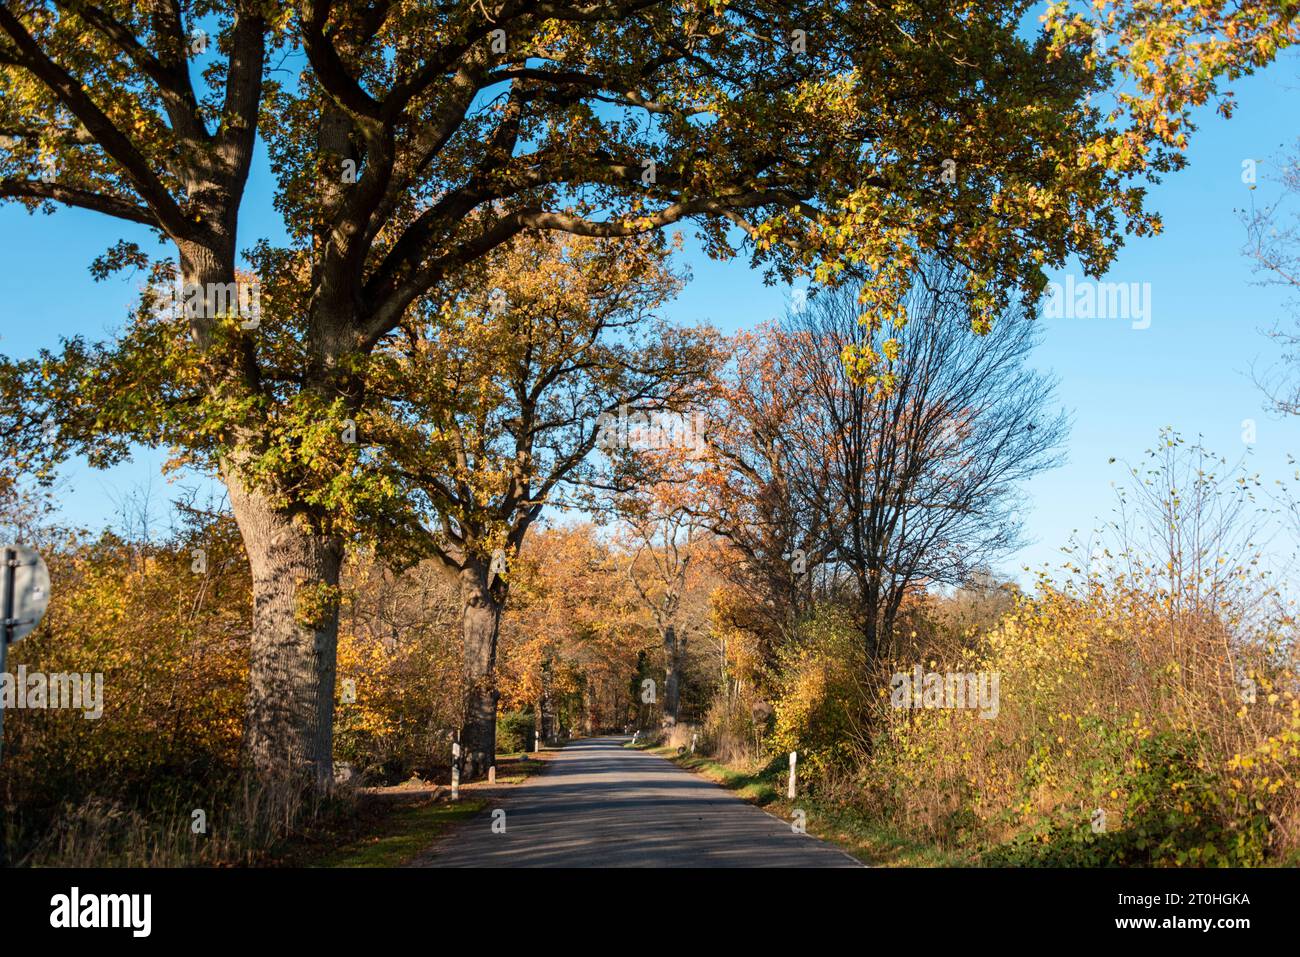 Landstraße im Herbst mit Eichenbäumen und buntem Laub *** Country road in autumn with oak trees and colorful foliage Credit: Imago/Alamy Live News Stock Photo